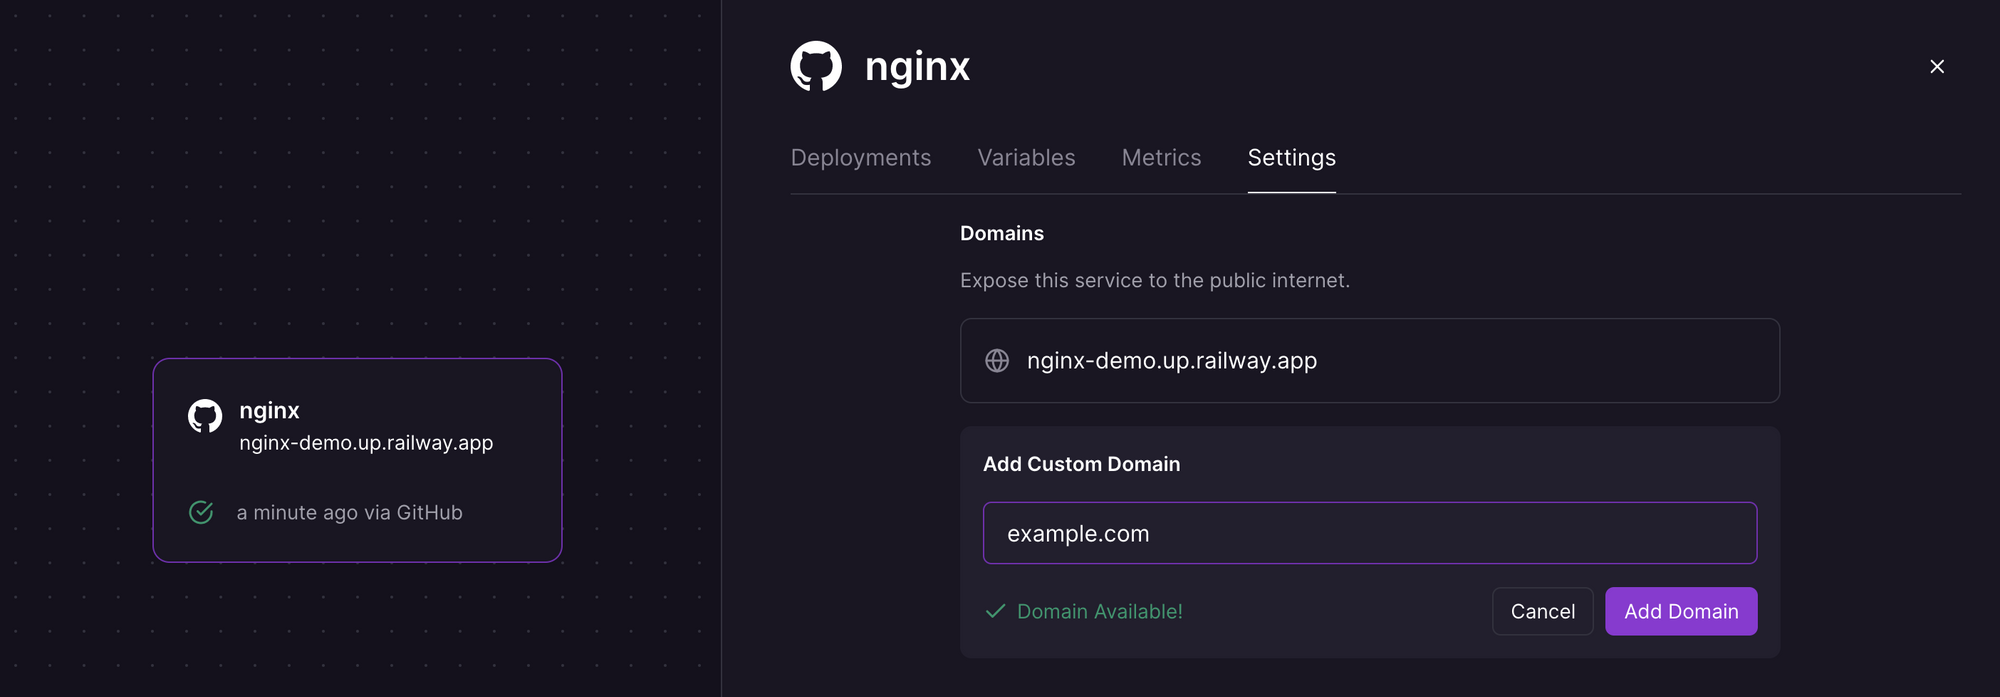 Add a custom domain for the NGINX service